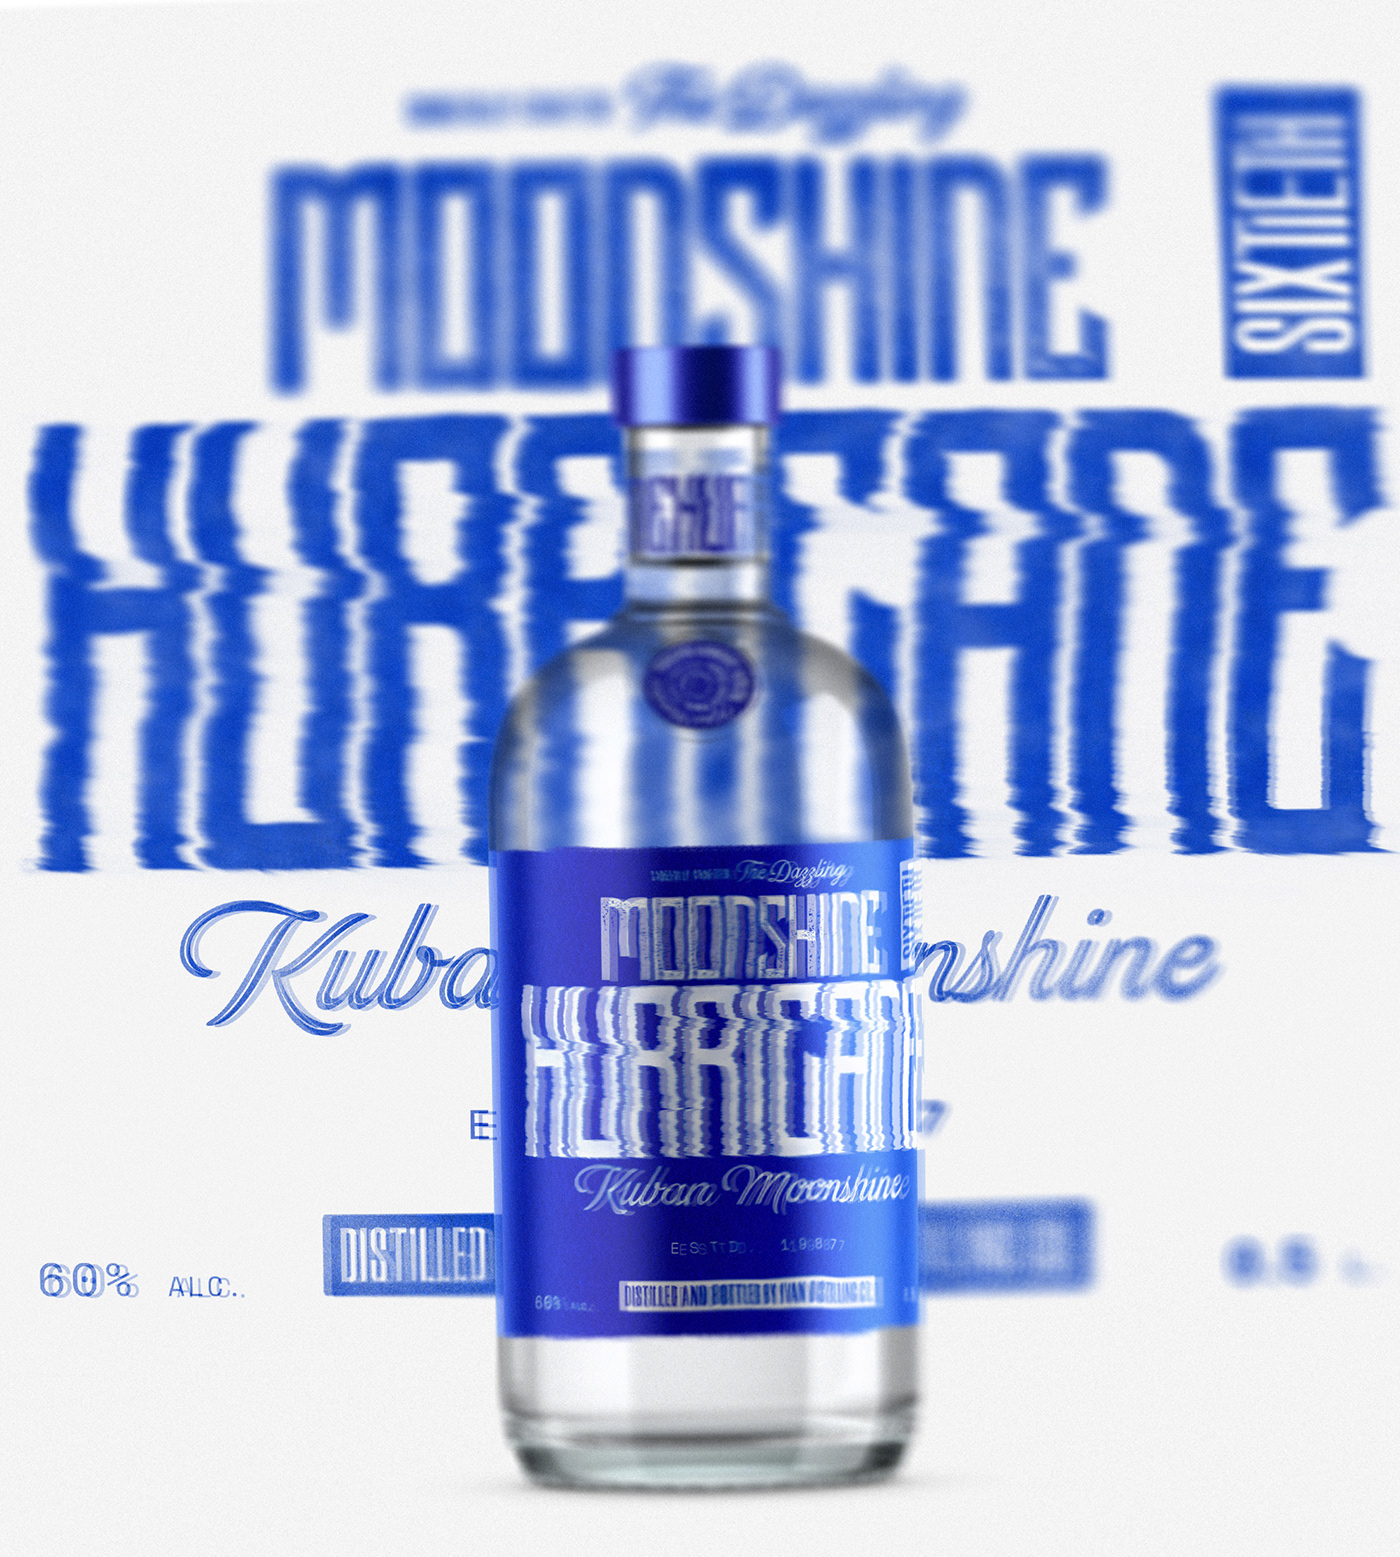 hurricane Label Moonshine Russia blue Packaging alcohol spirit этикетка ураган